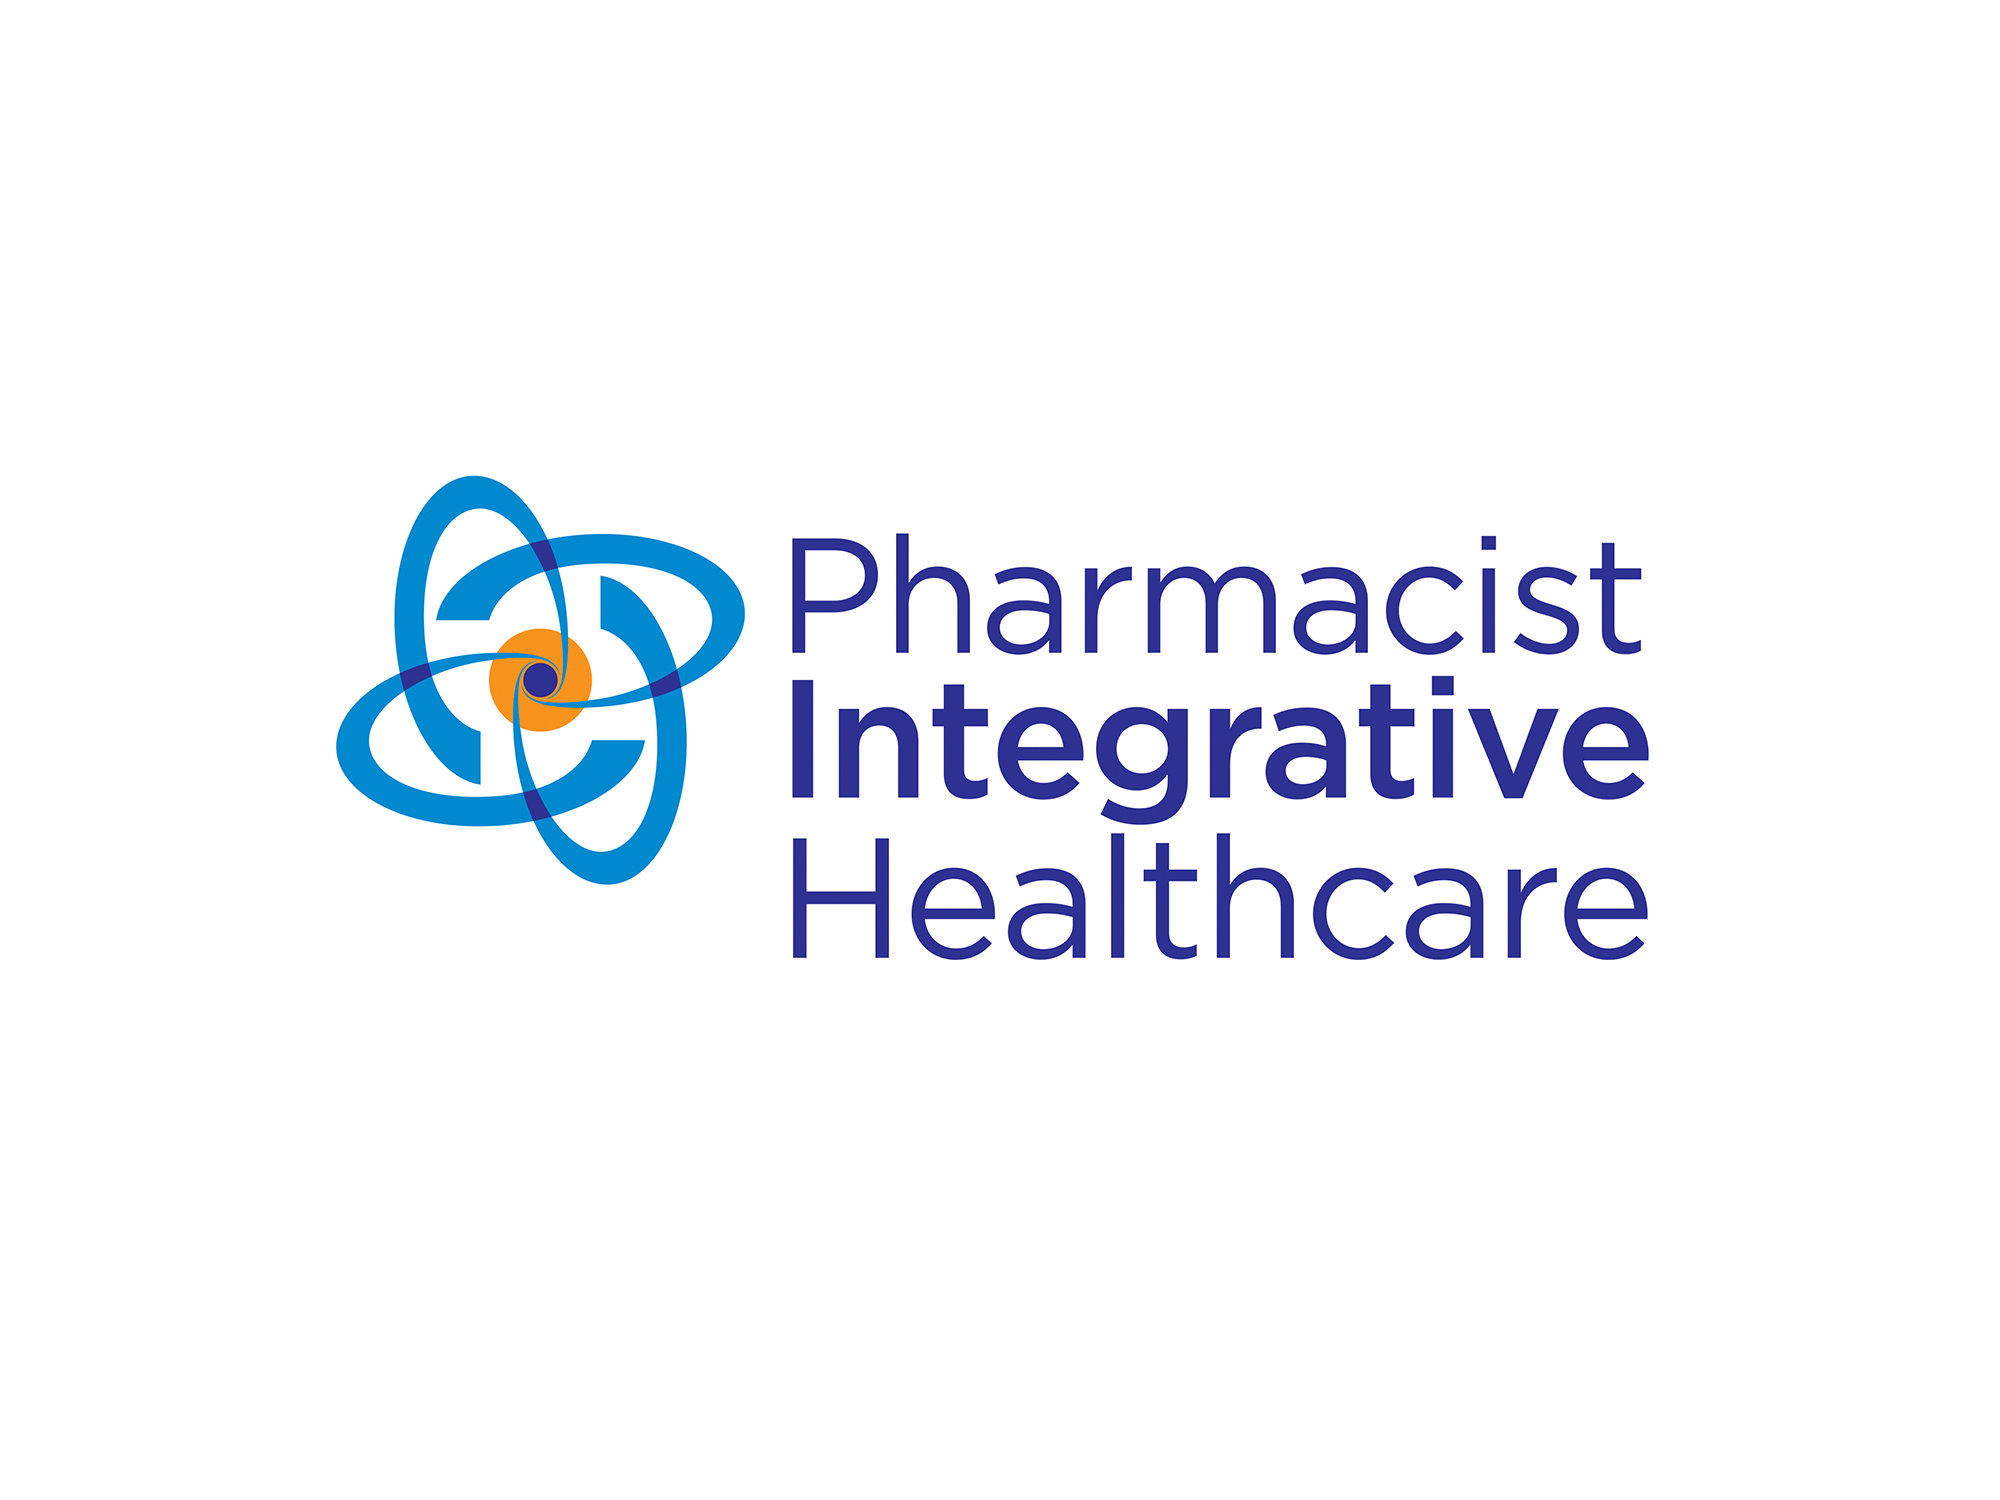 https://newmangrace.com/project/pharmacist-integrative-healthcare/